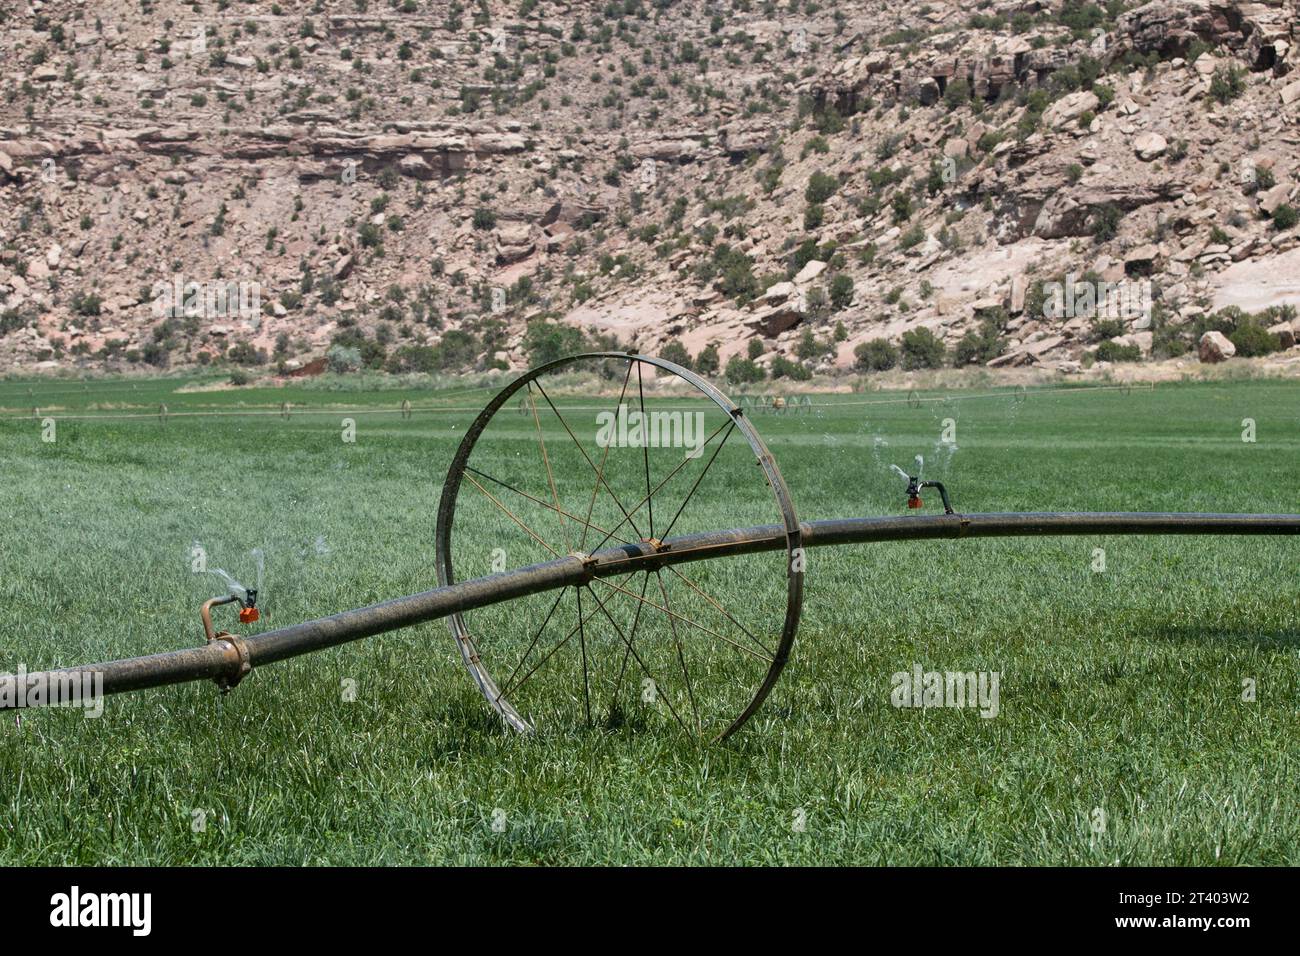 Old ancient wheel sprinkler for irrigation in green grass farmyard plantation in Colorado desert Stock Photo